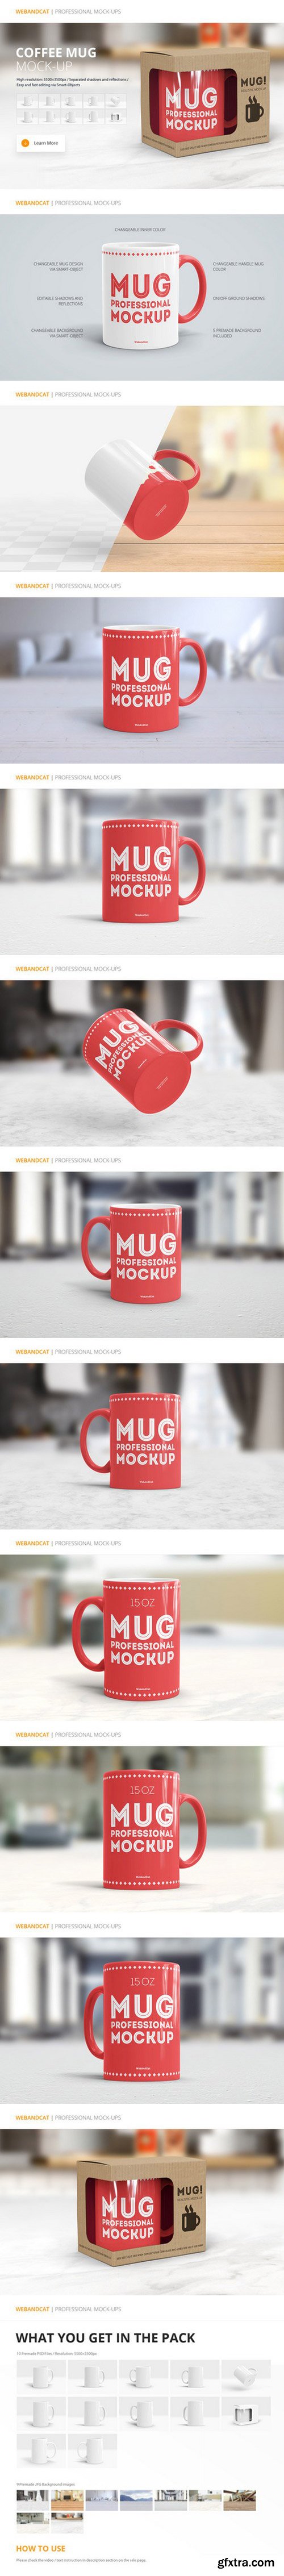 CM - Coffee Mug Mockup 447916